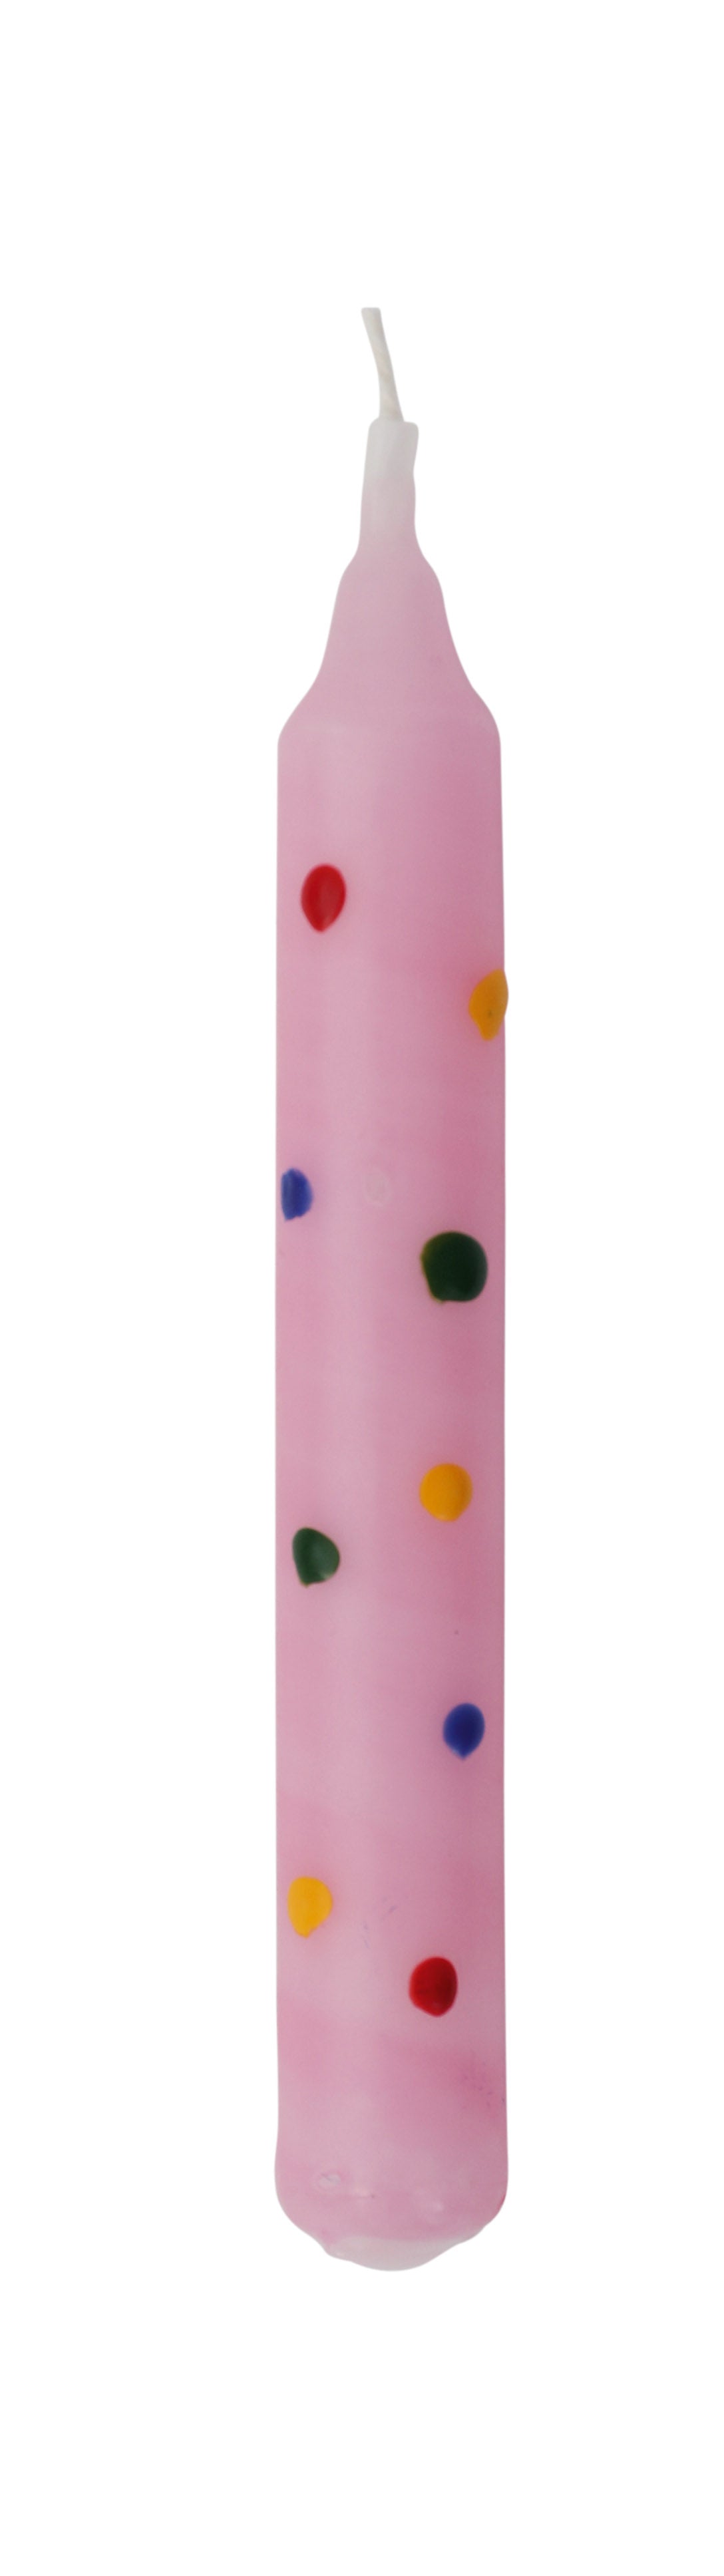 Ahrens AHS - Kerze rosa mit bunten Punkten